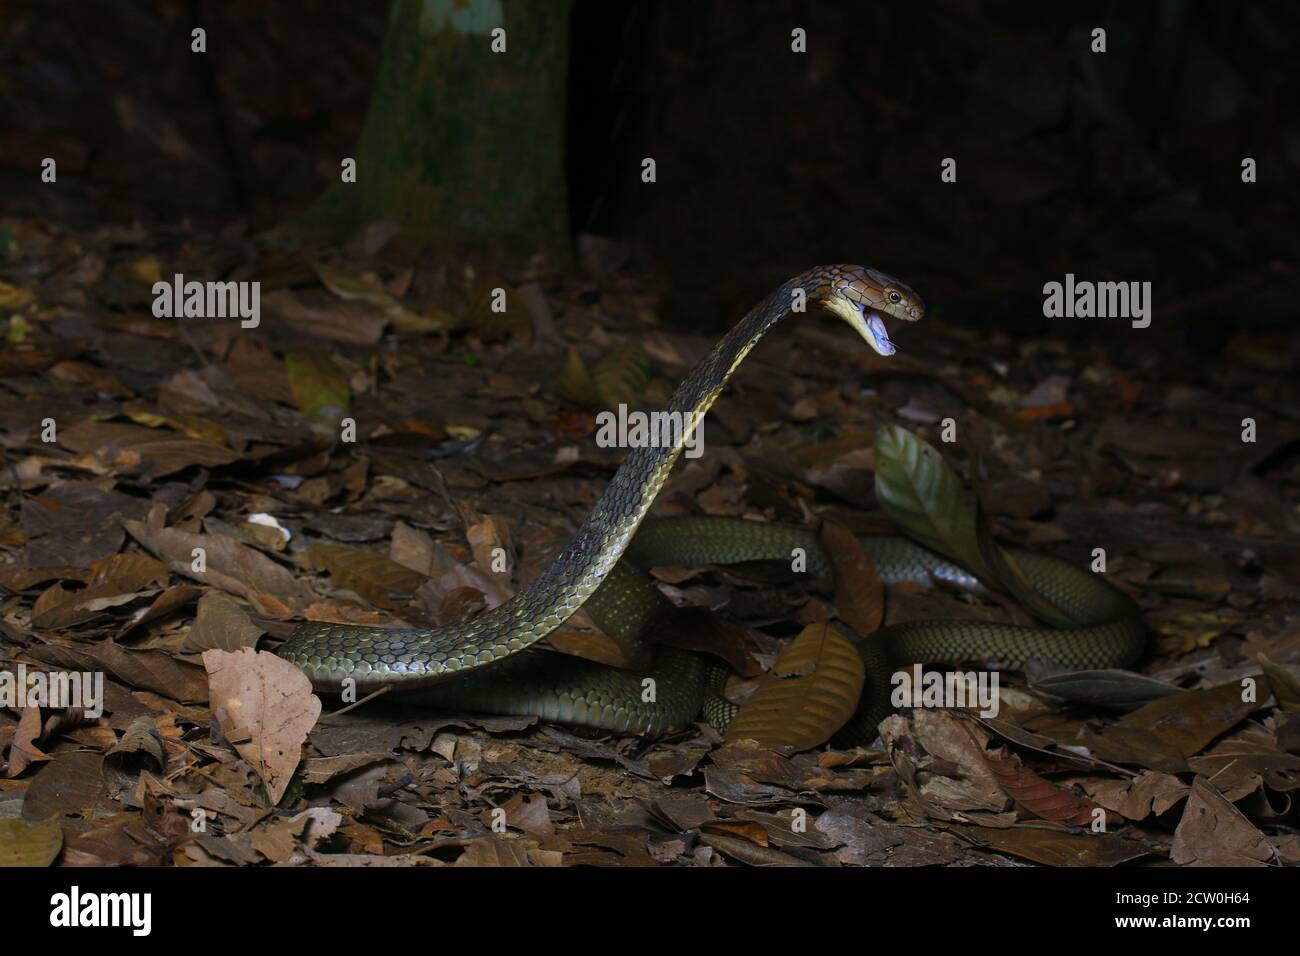 King cobra, Ophiophagus hannah, the longest venomous snake Stock Photo